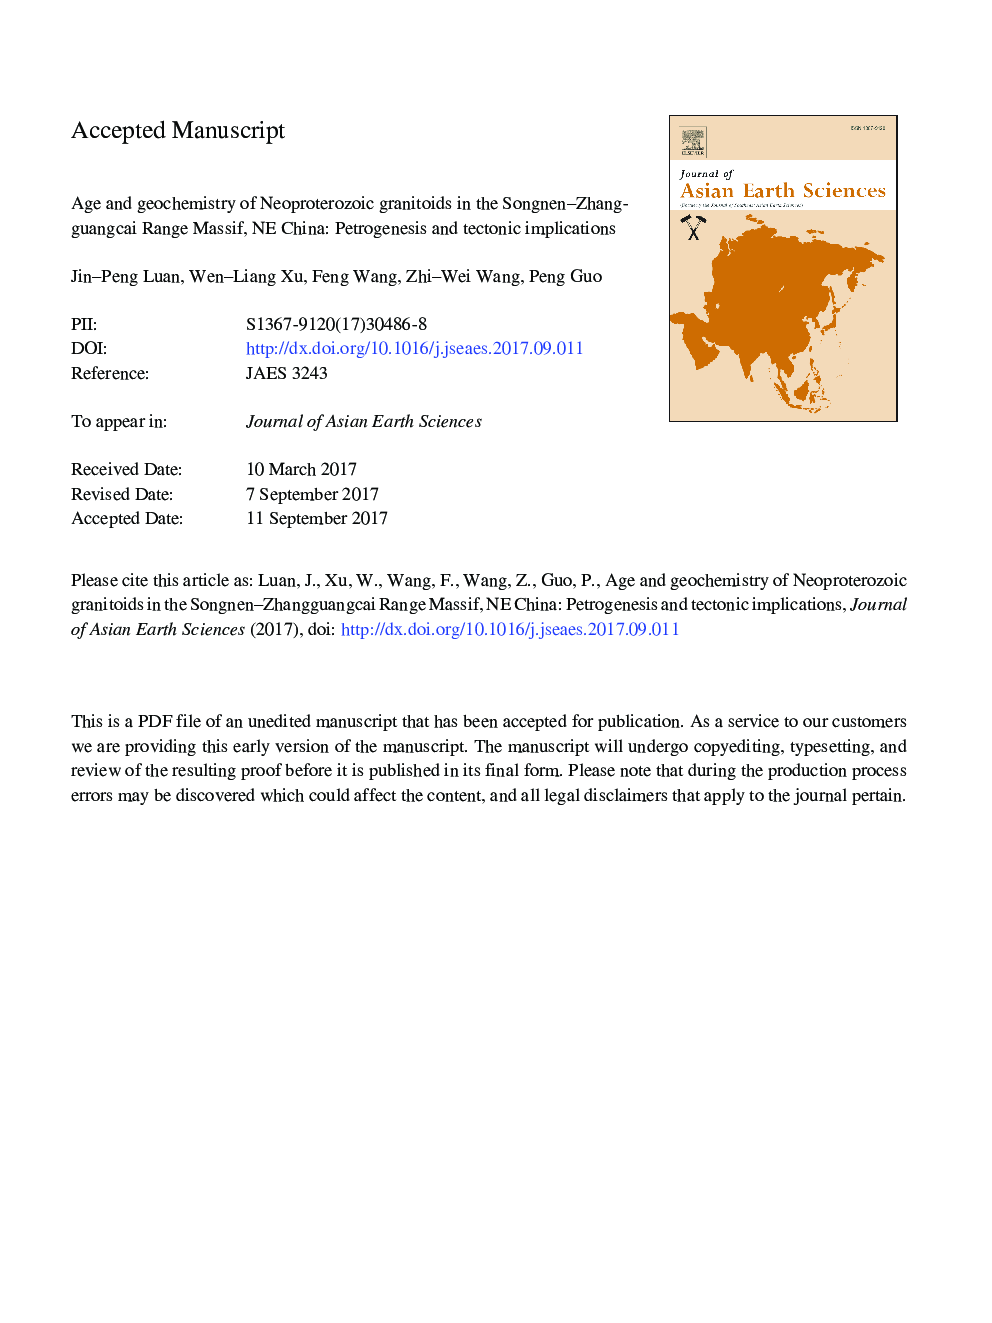 Age and geochemistry of Neoproterozoic granitoids in the Songnen-Zhangguangcai Range Massif, NE China: Petrogenesis and tectonic implications